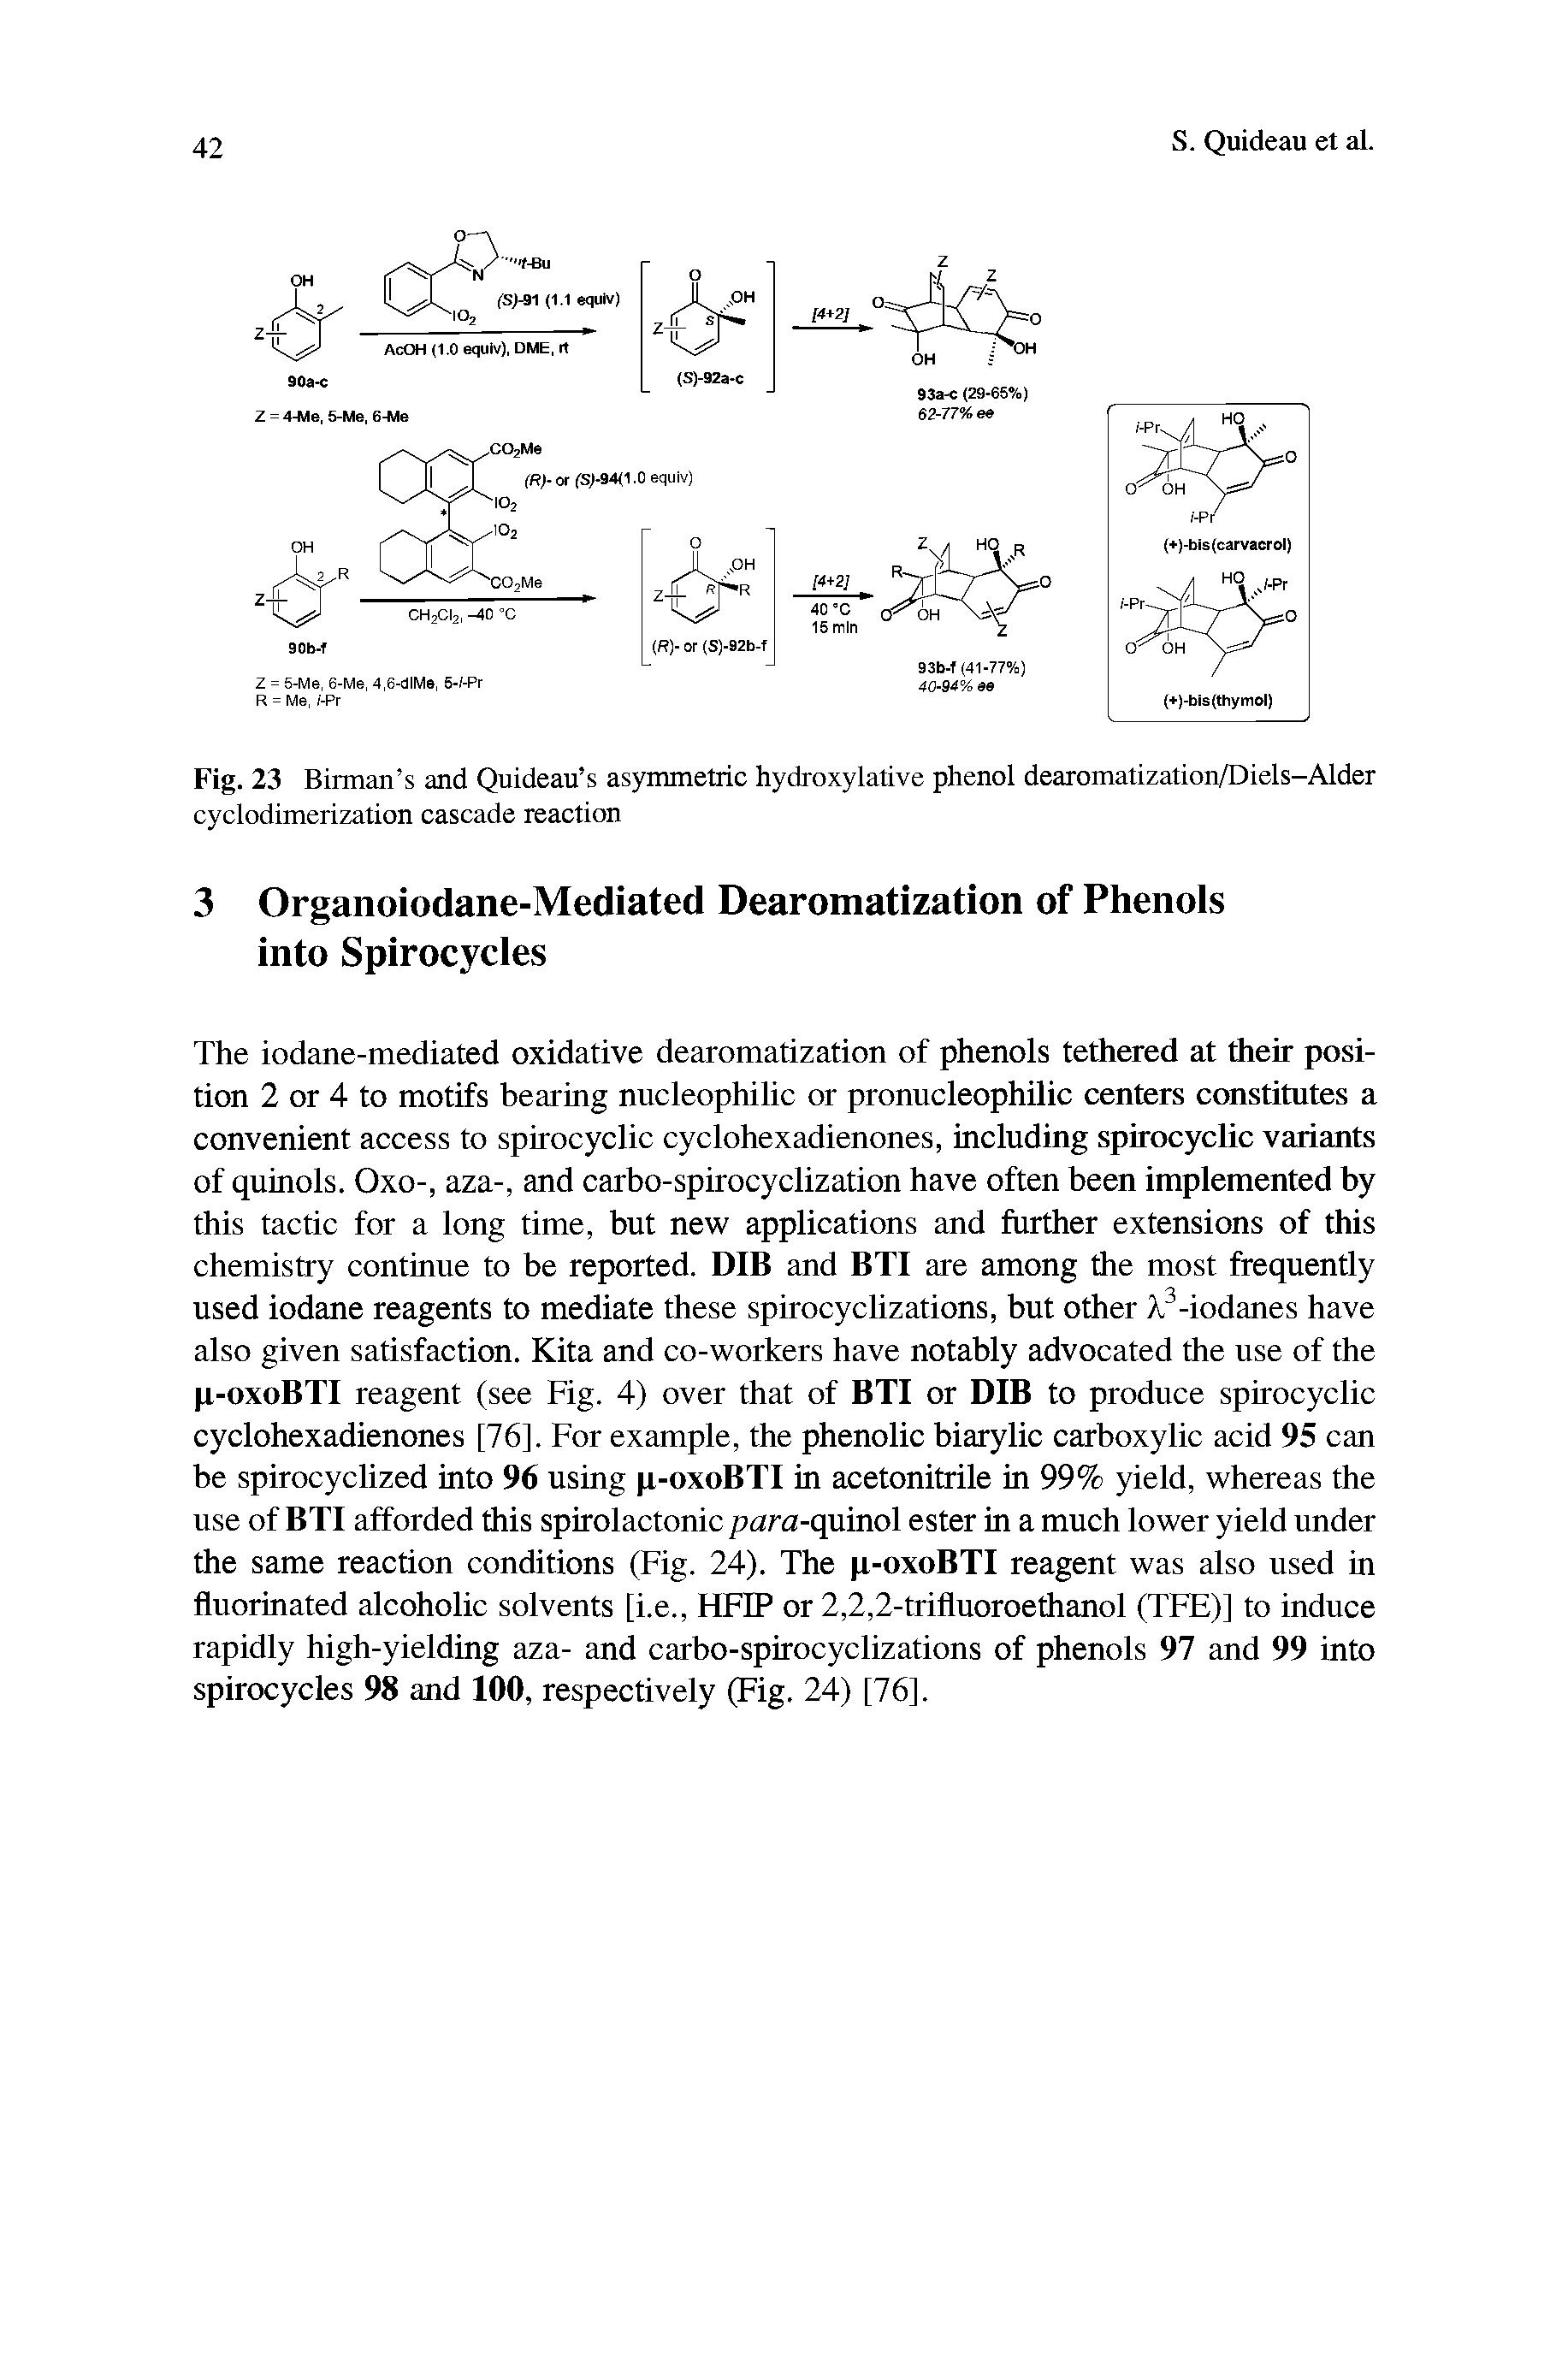 Fig. 23 Birman s and Quideau s as5Tnmetric hydroxylative phenol dearomatization/Diels-Alder cyclodimerization cascade reaction...